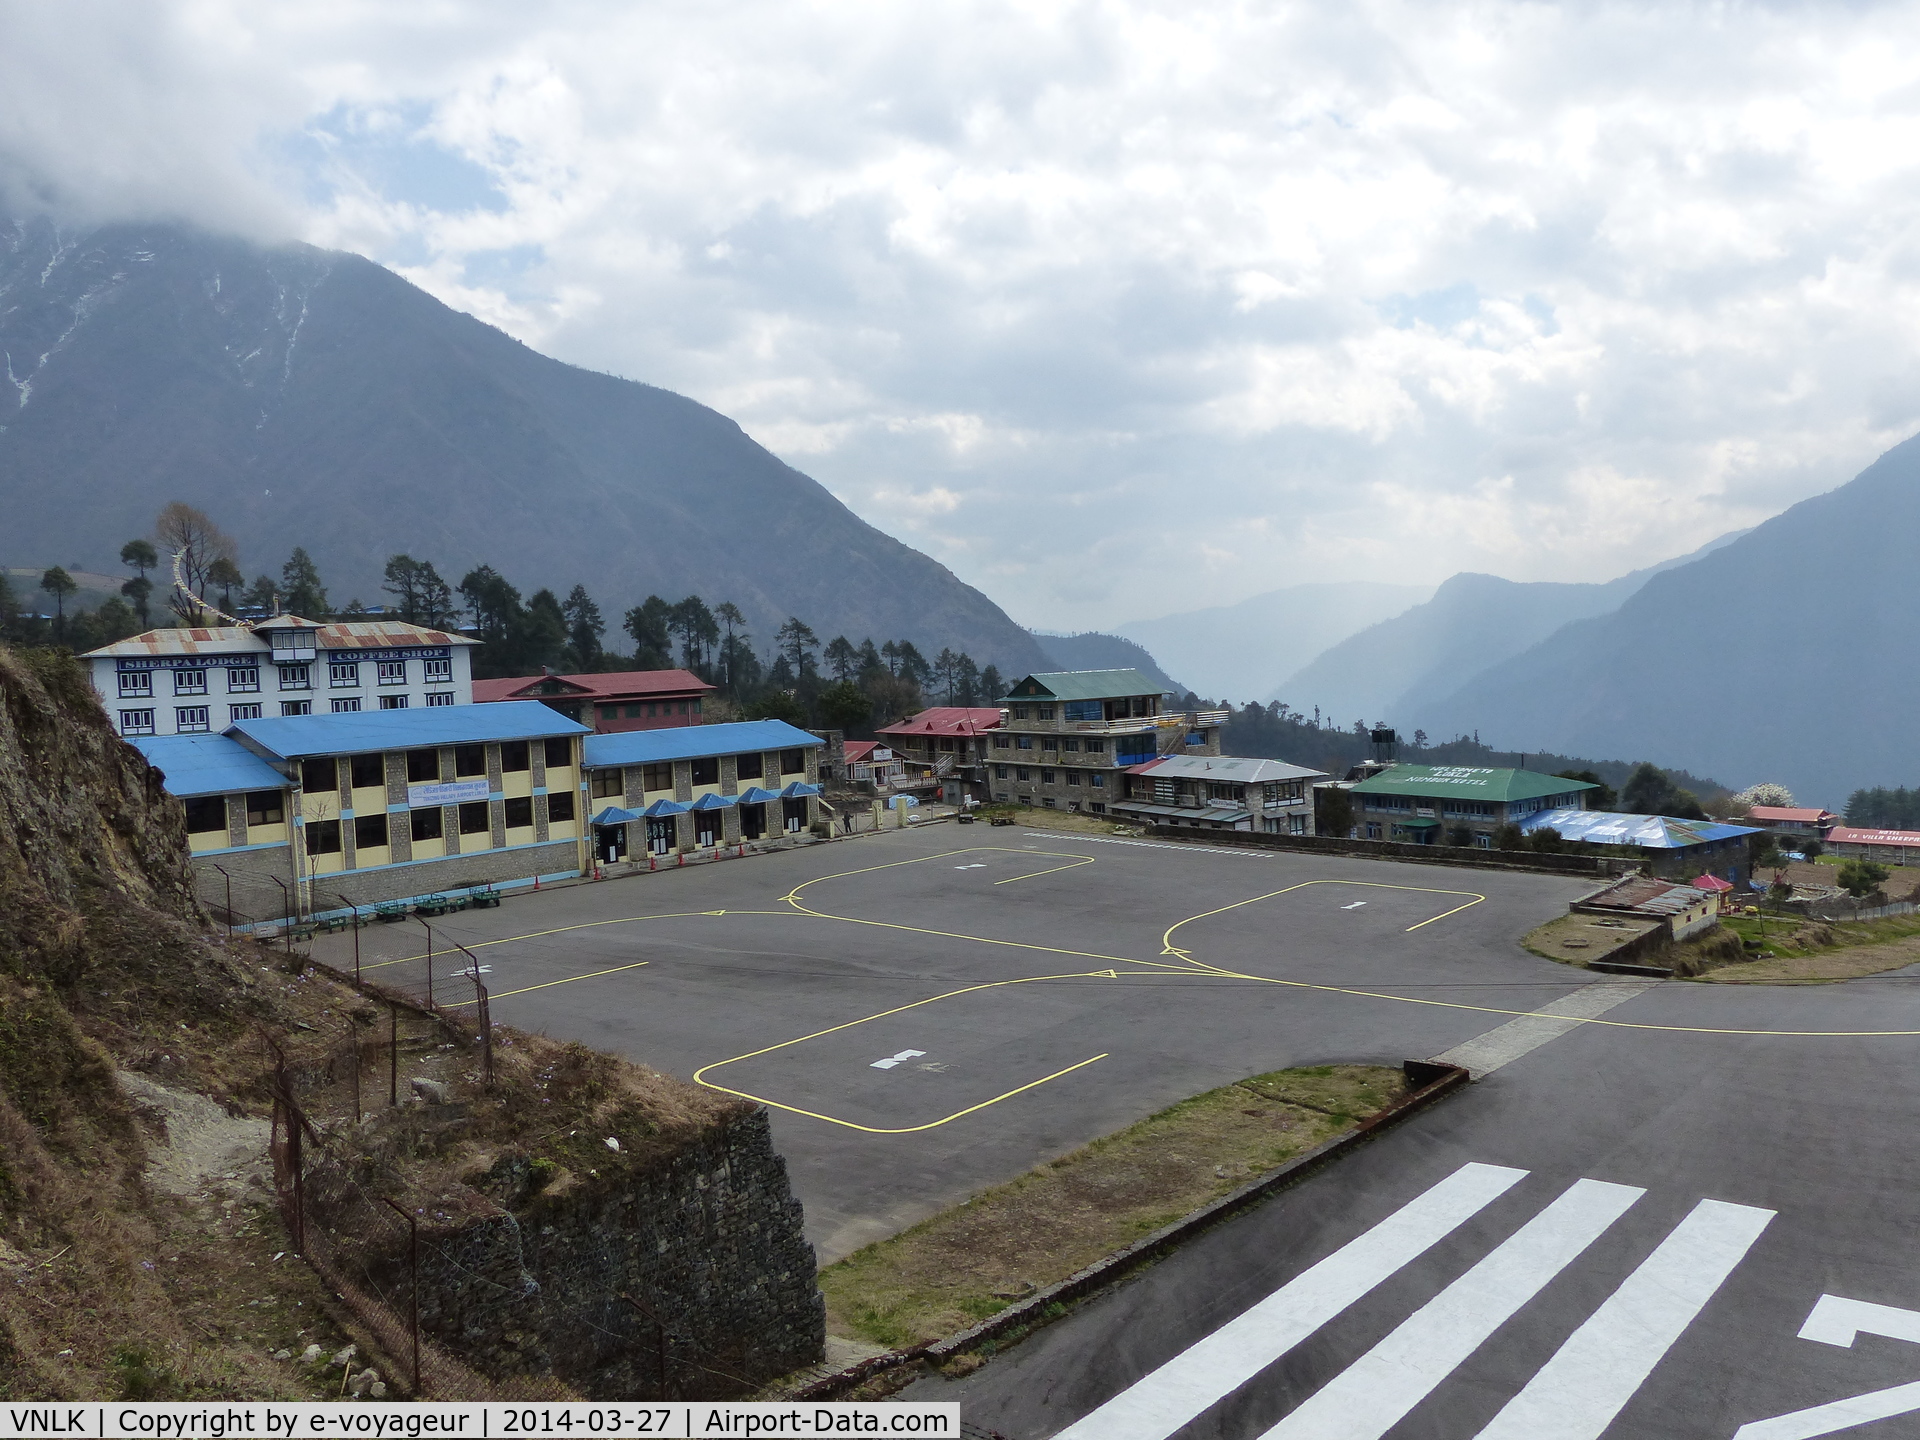 Lukla Airport, Lukla Nepal (VNLK) - Tensing-Hillary Airport : 1 piste 500 m, 12 % dénivelé